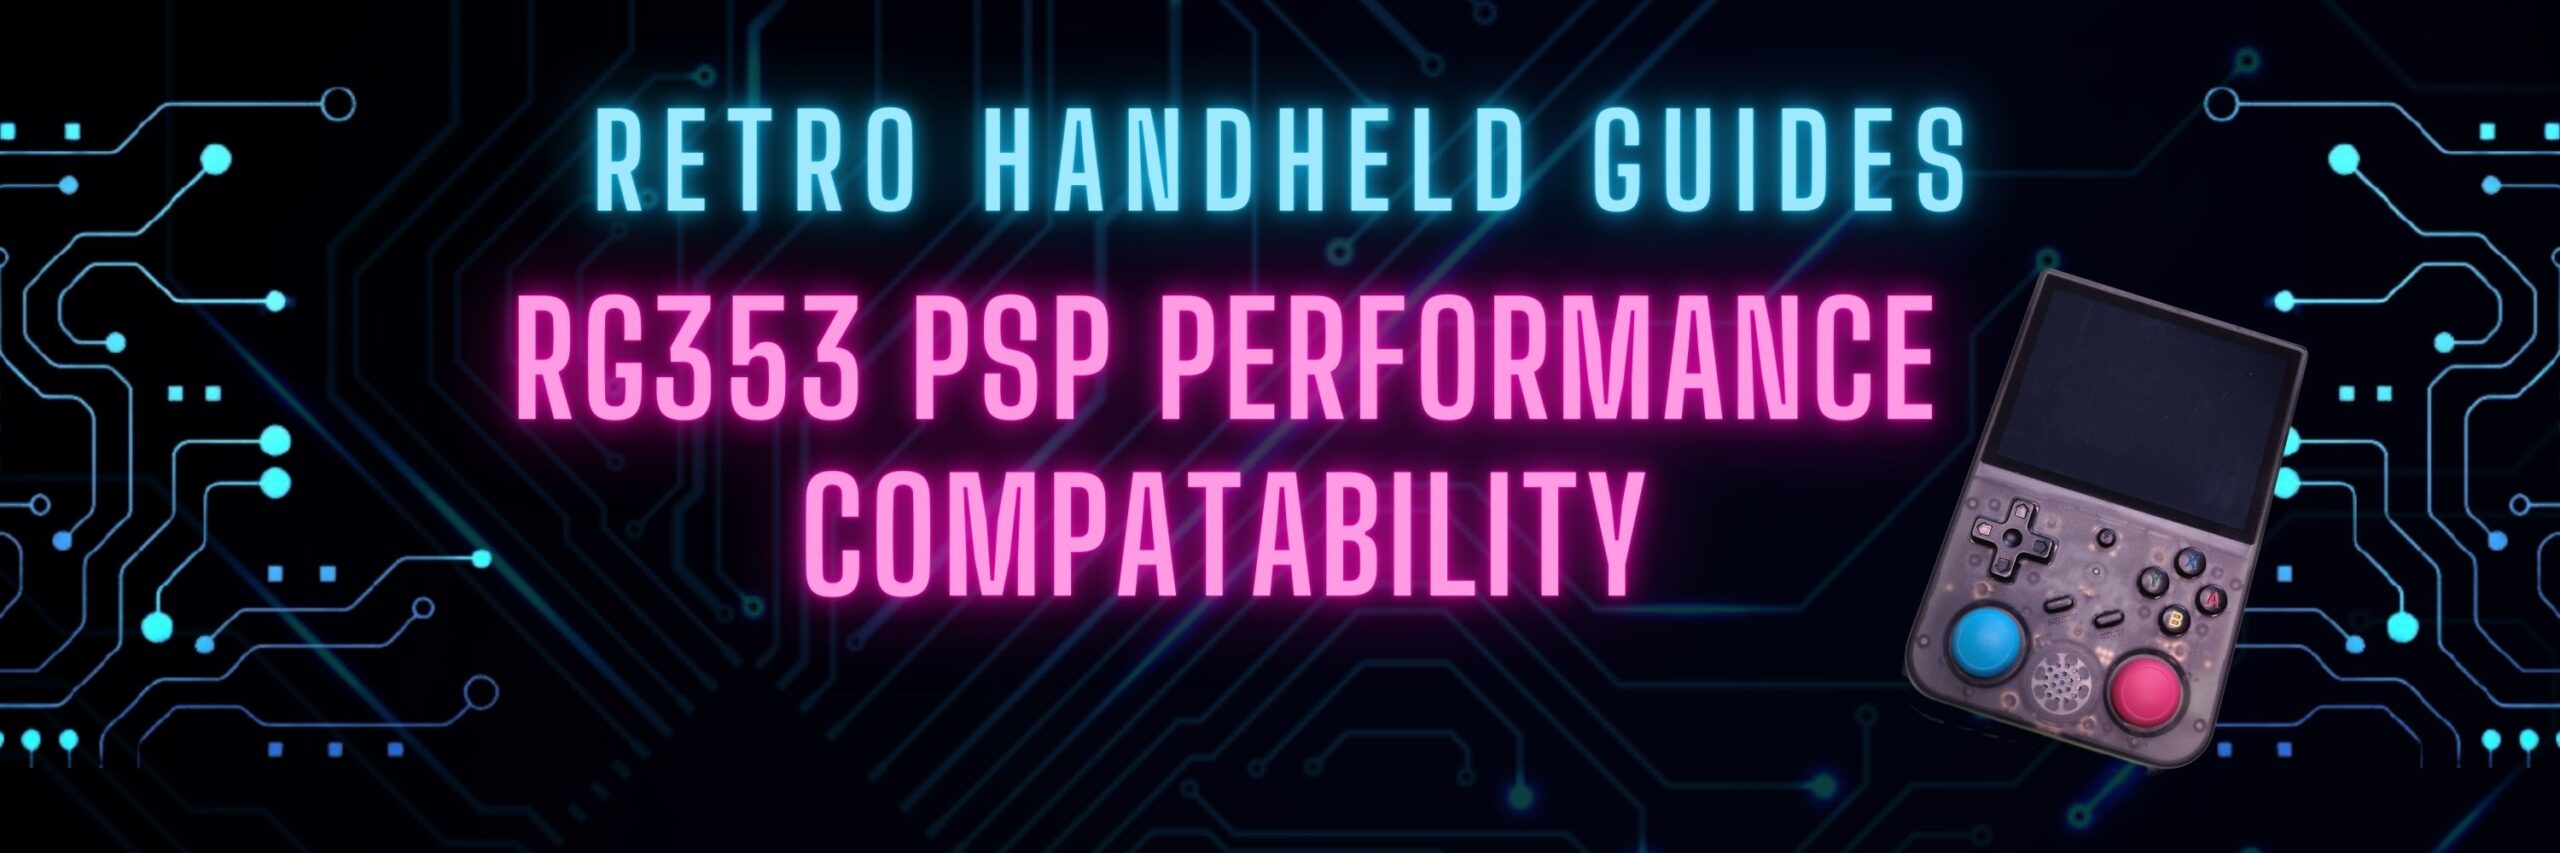 RG353 PSP Performance